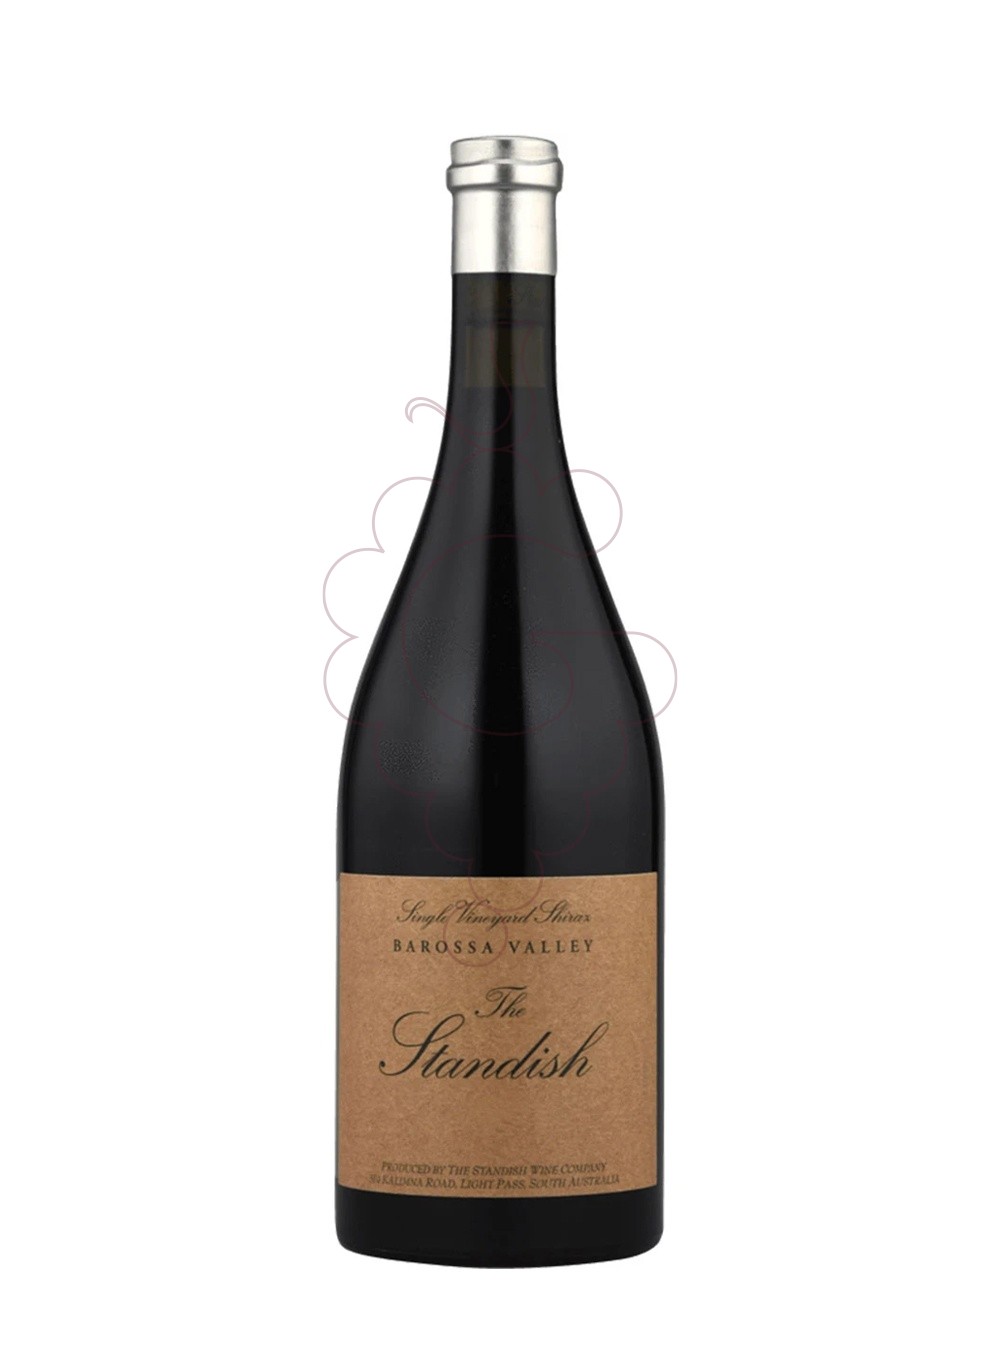 Foto The Standish Barossa Valley vino tinto